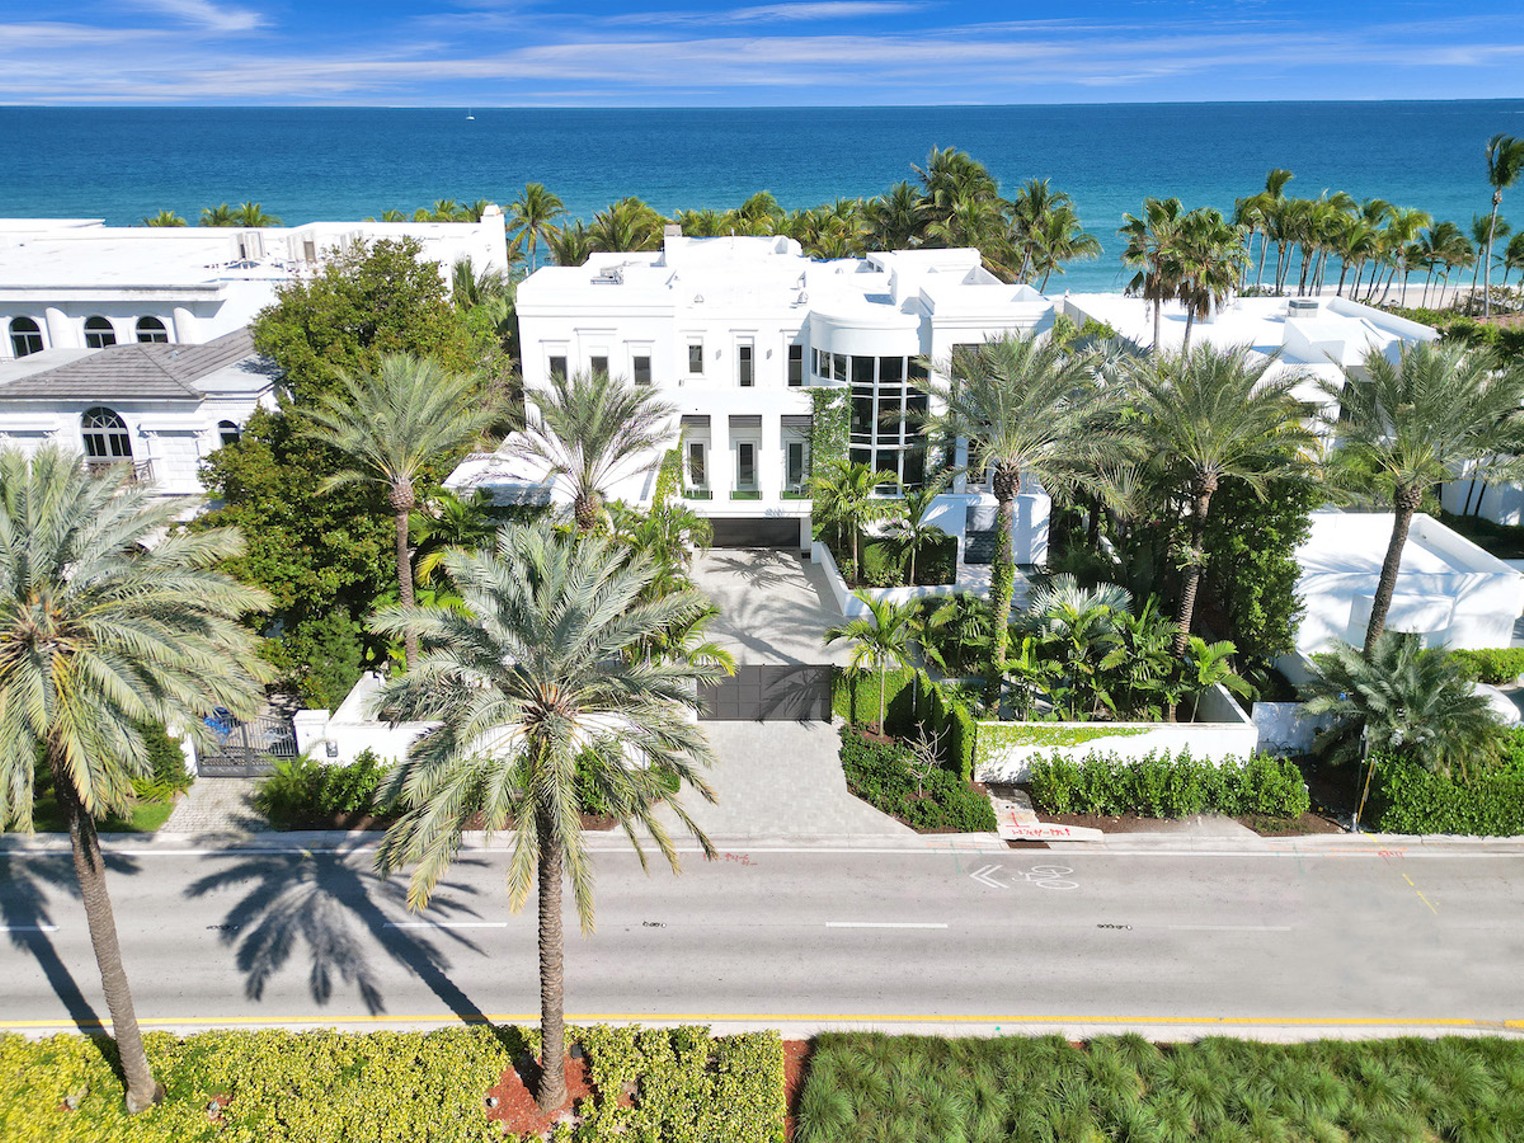 Miami Real Estate Mogul, Scientologist Lists $42M Mansion on Cryptocurrency Platform